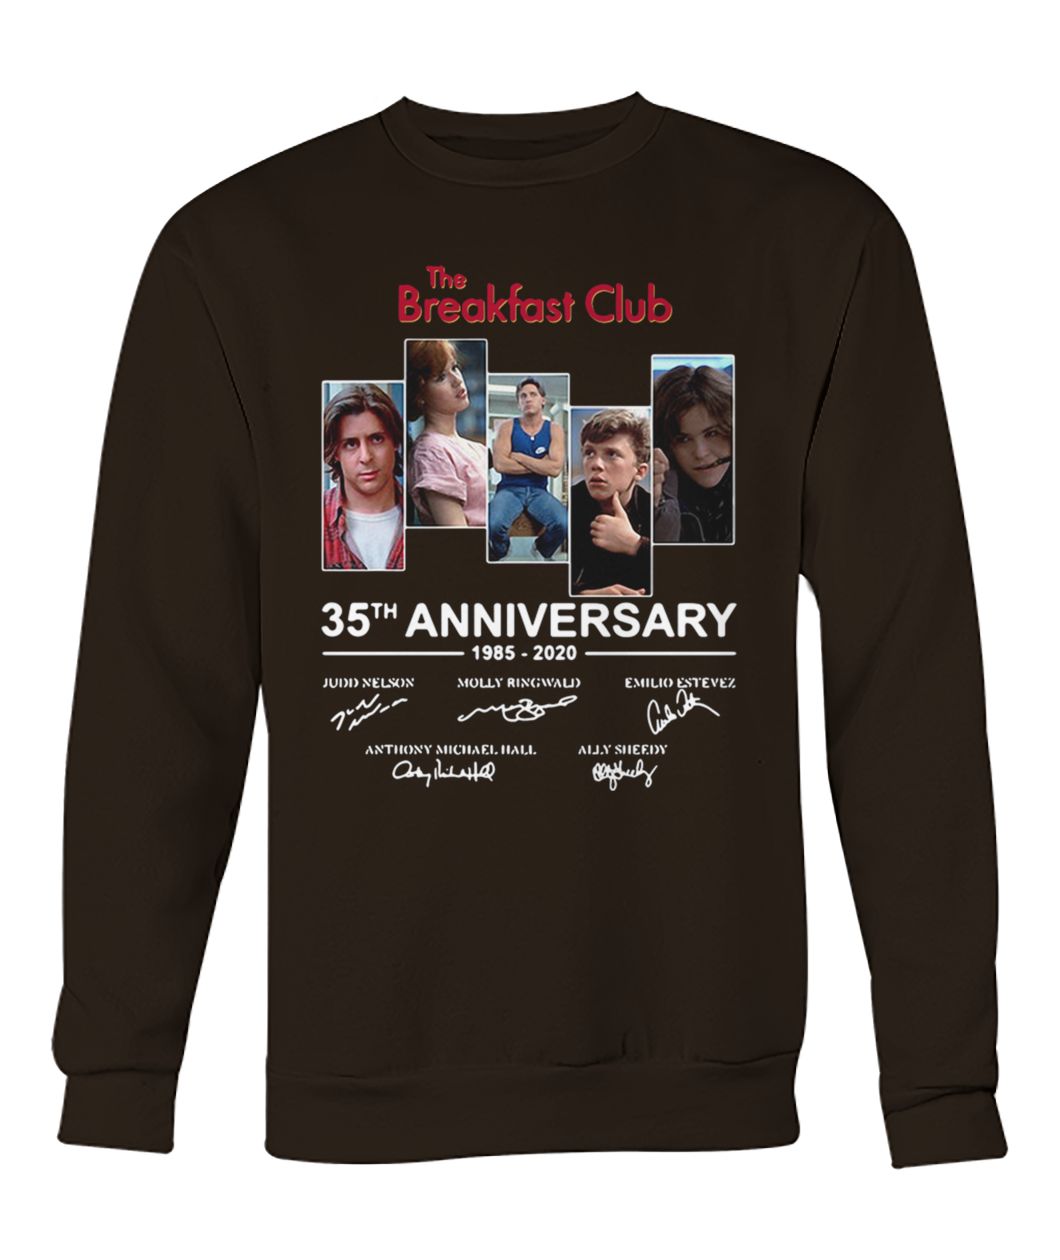 The breakfast club 35th anniversary 1985 2020 signatures crew neck sweatshirt